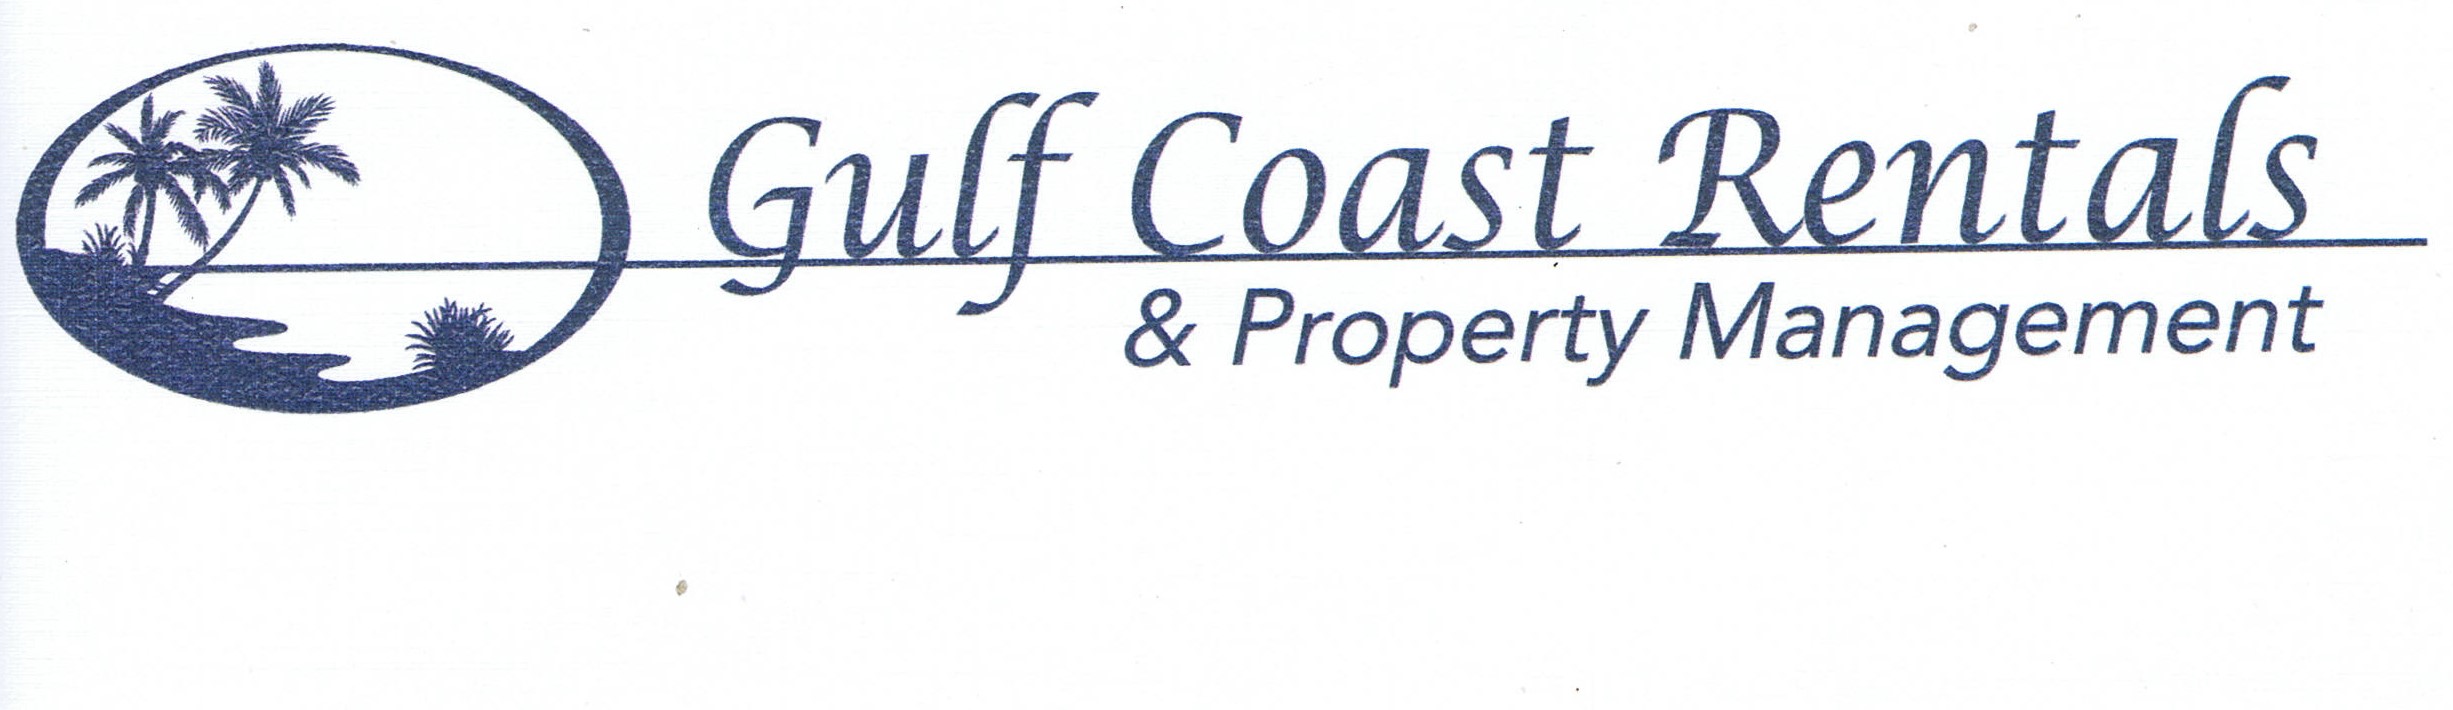 Gulf Coast Rentals & Property Management